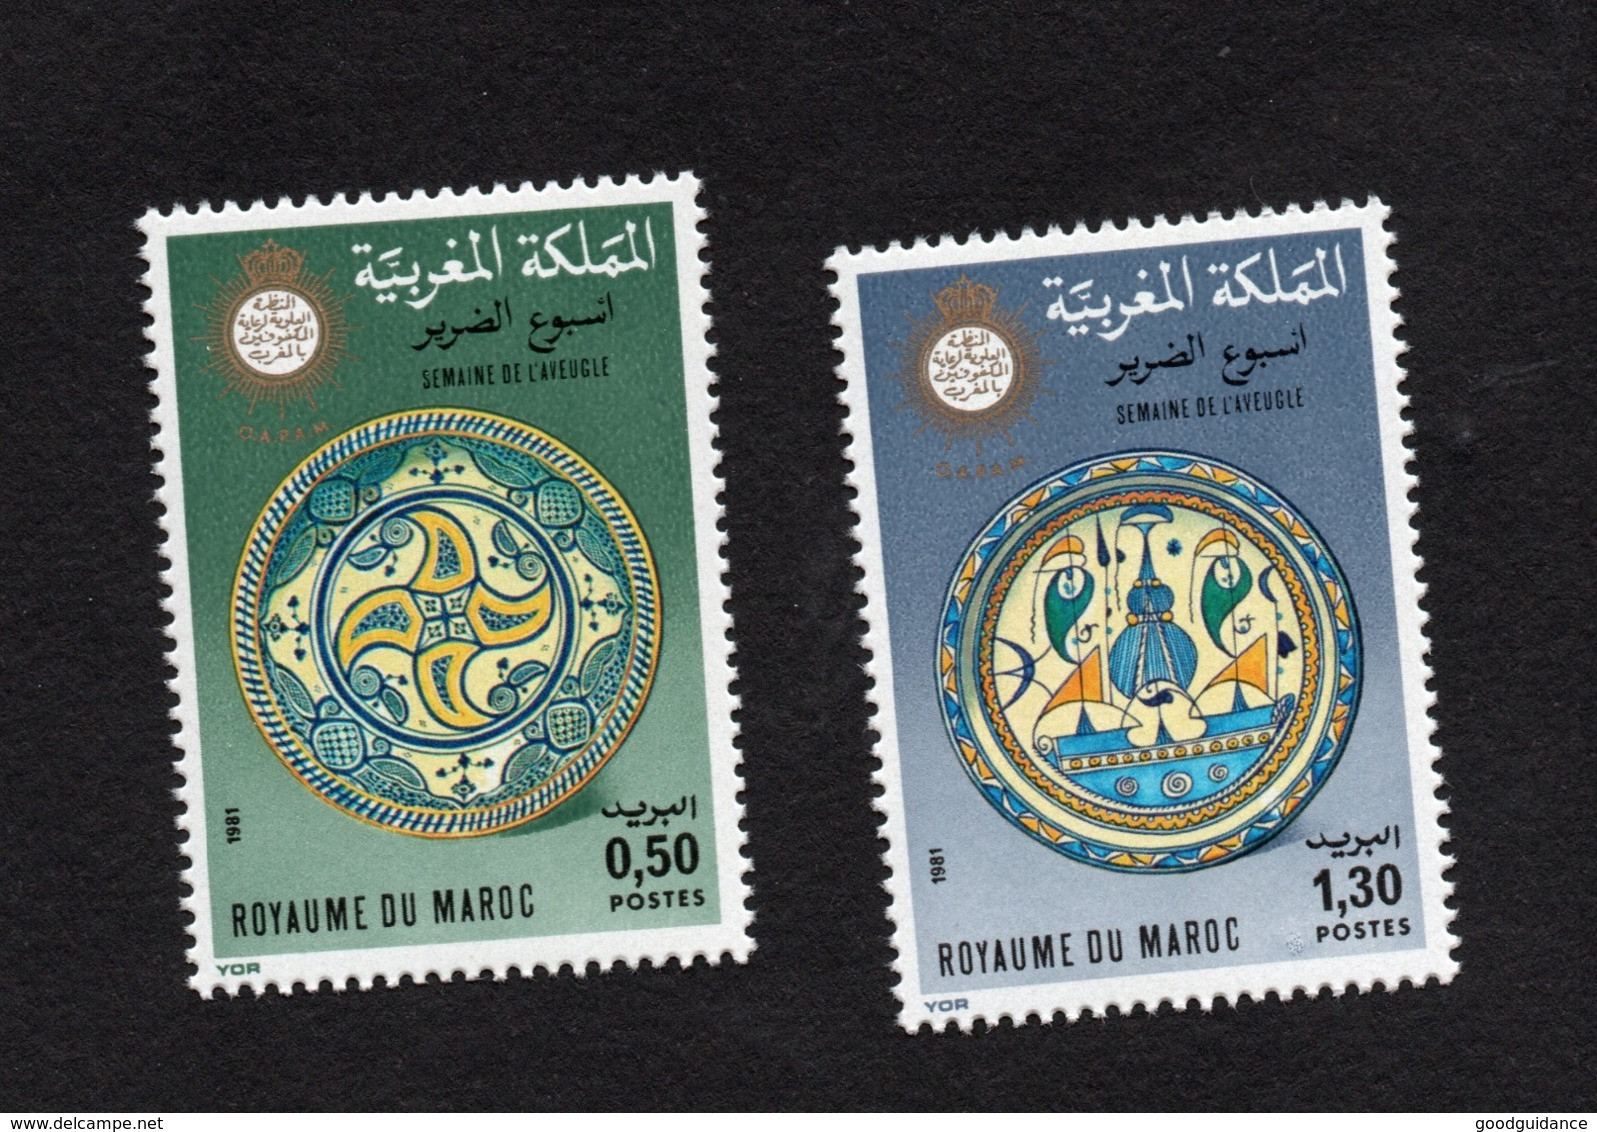 1981- Morocco - Maroc - Blind Week- Seamaine De L'aveugle - Complete Set 2v.MNH** - Krankheiten